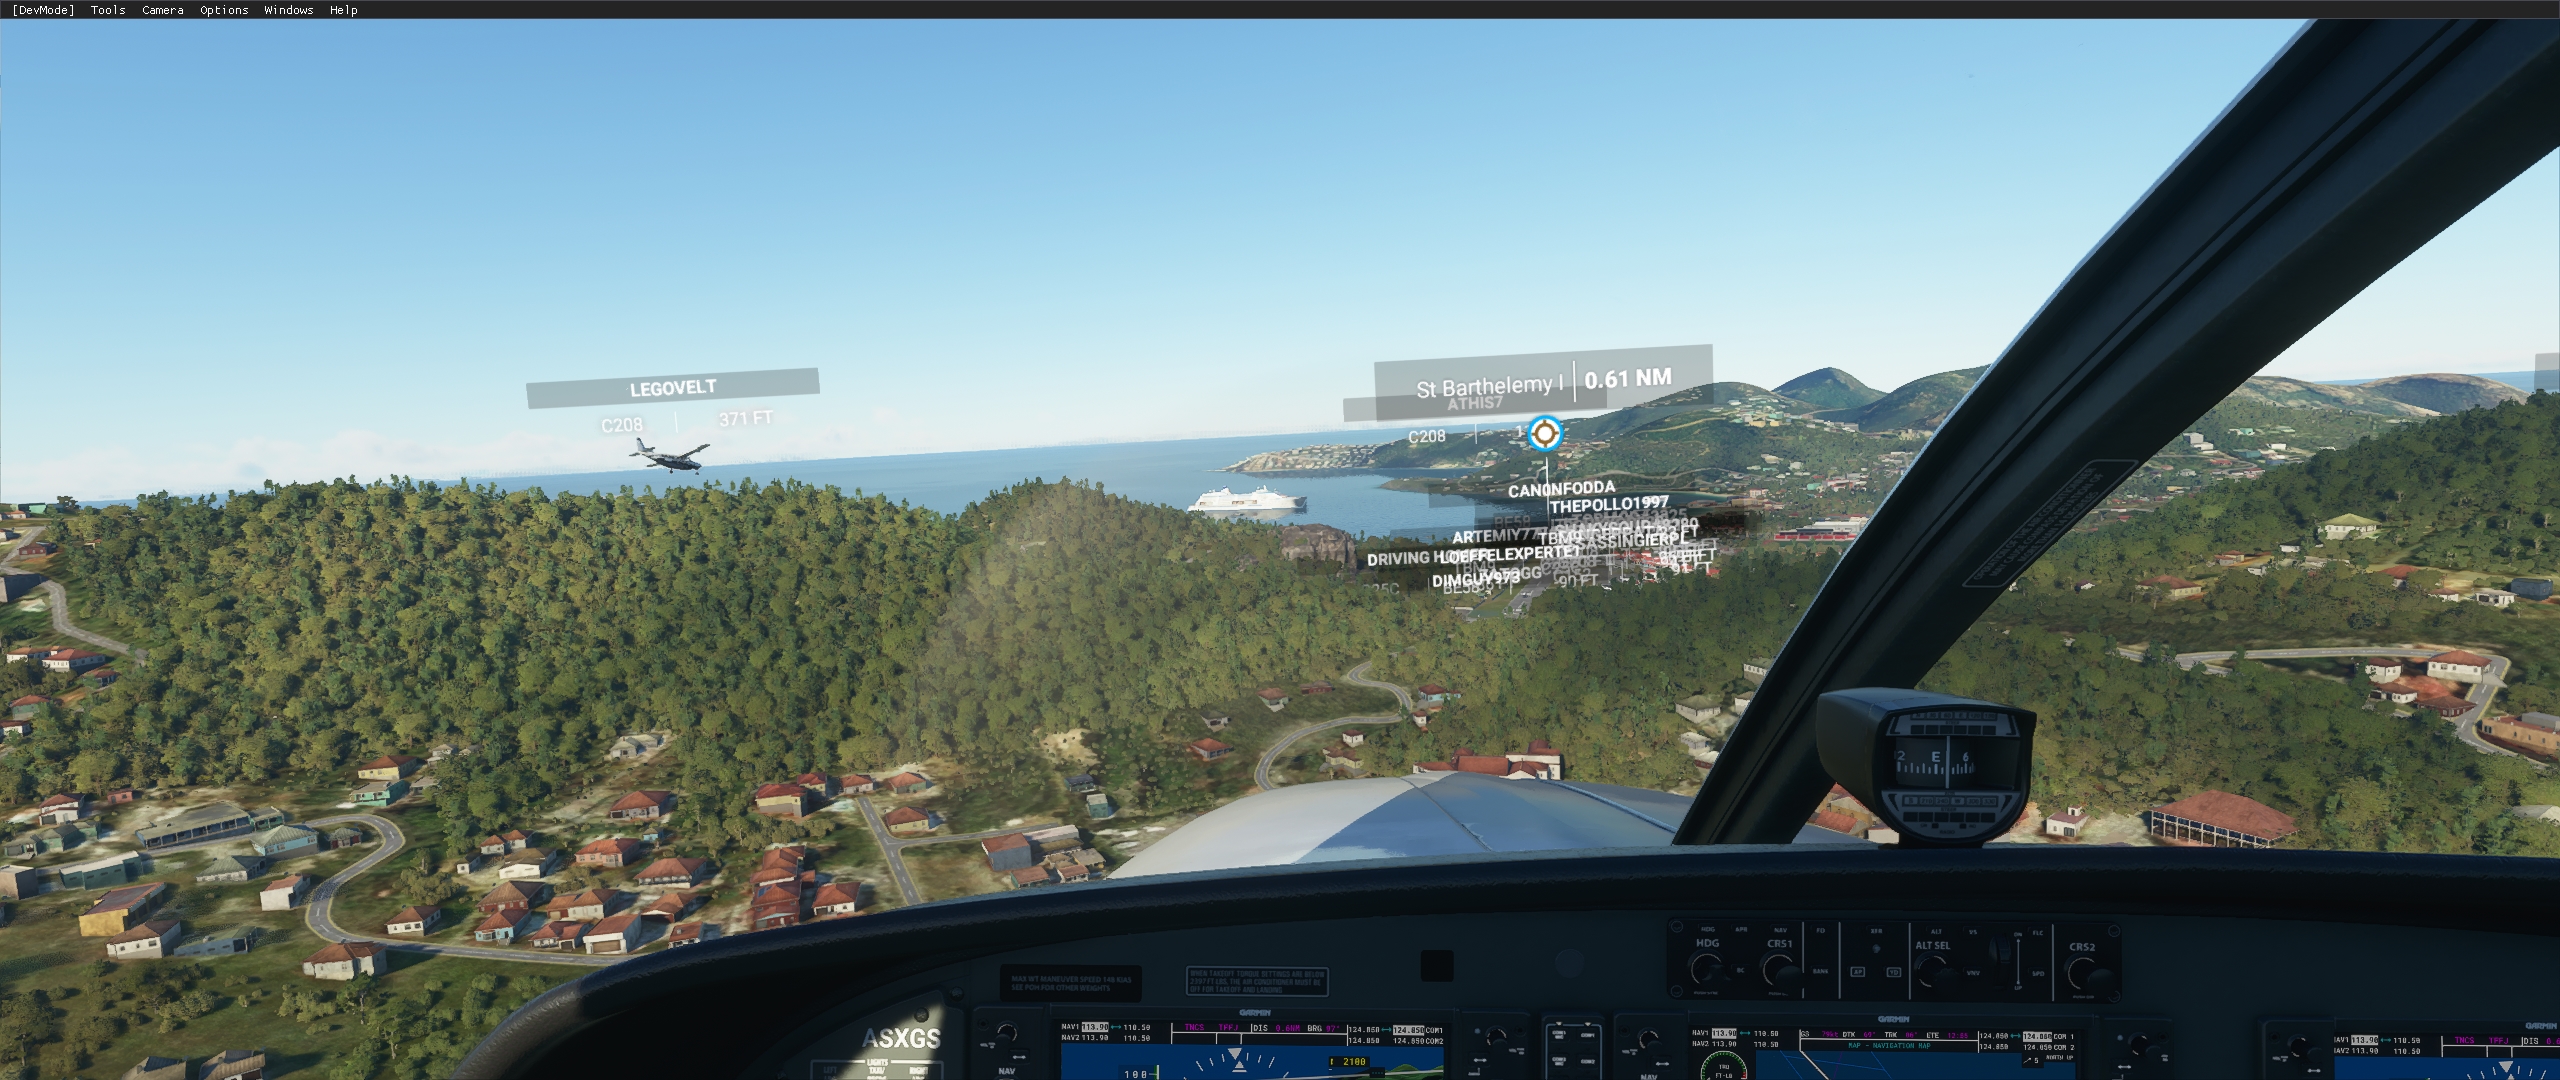 2020-08-28 22_40_56-Microsoft Flight Simulator - 1.7.12.0.jpg